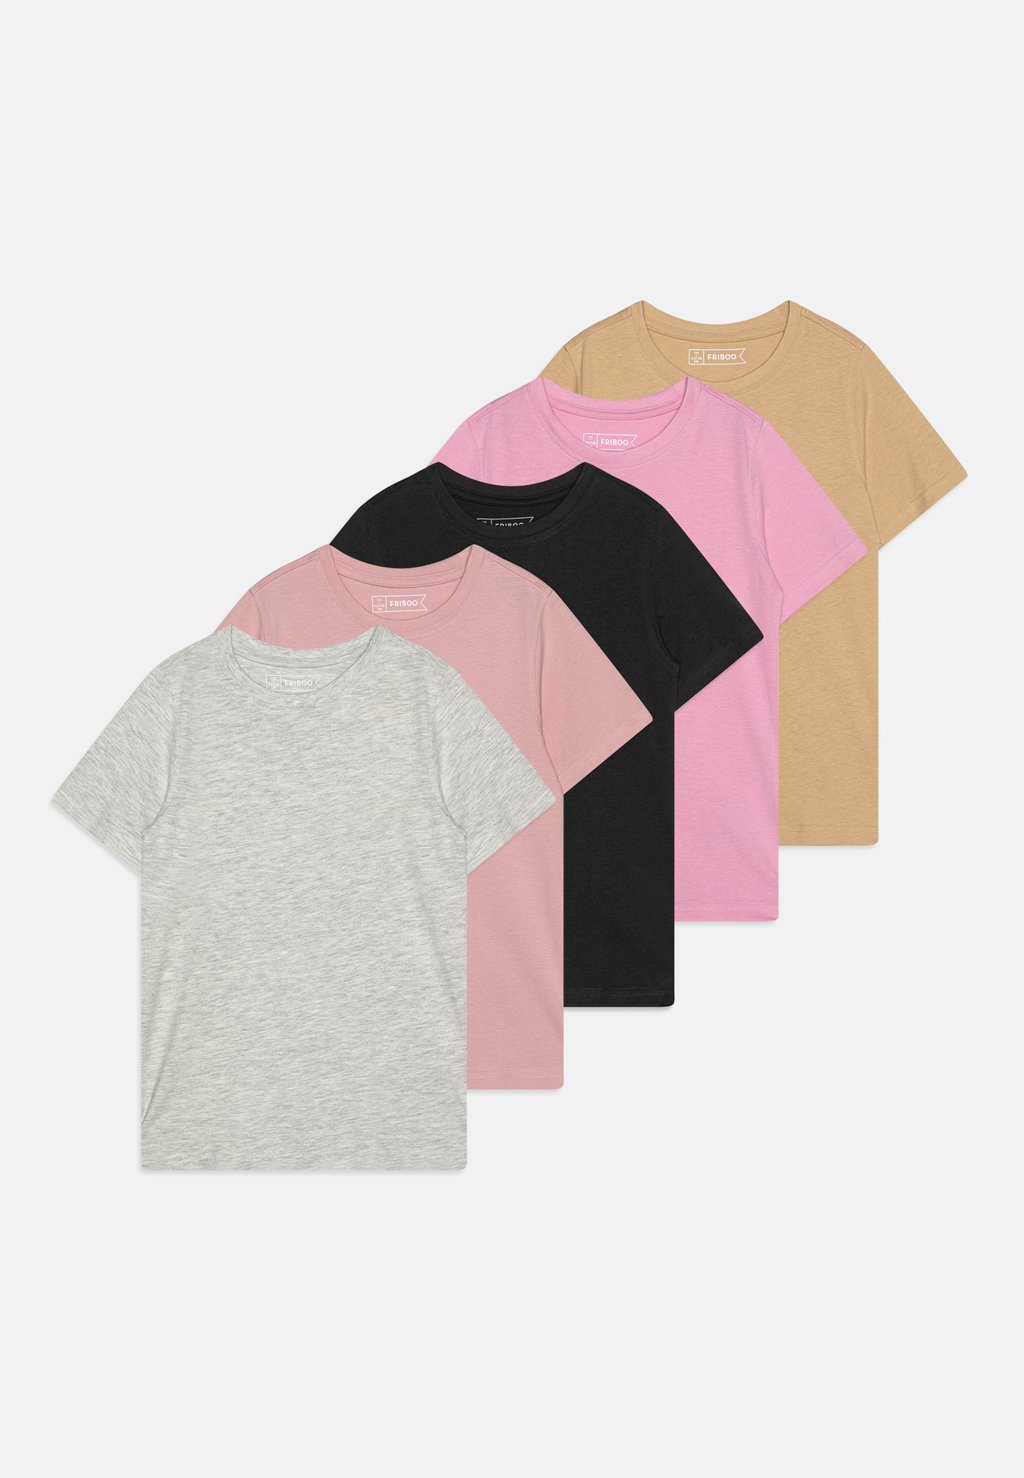 футболка с принтом Unisex 5 Pack Friboo, цвет black/light pink/mottled light grey t9139 light light black 200 мл c13t913900